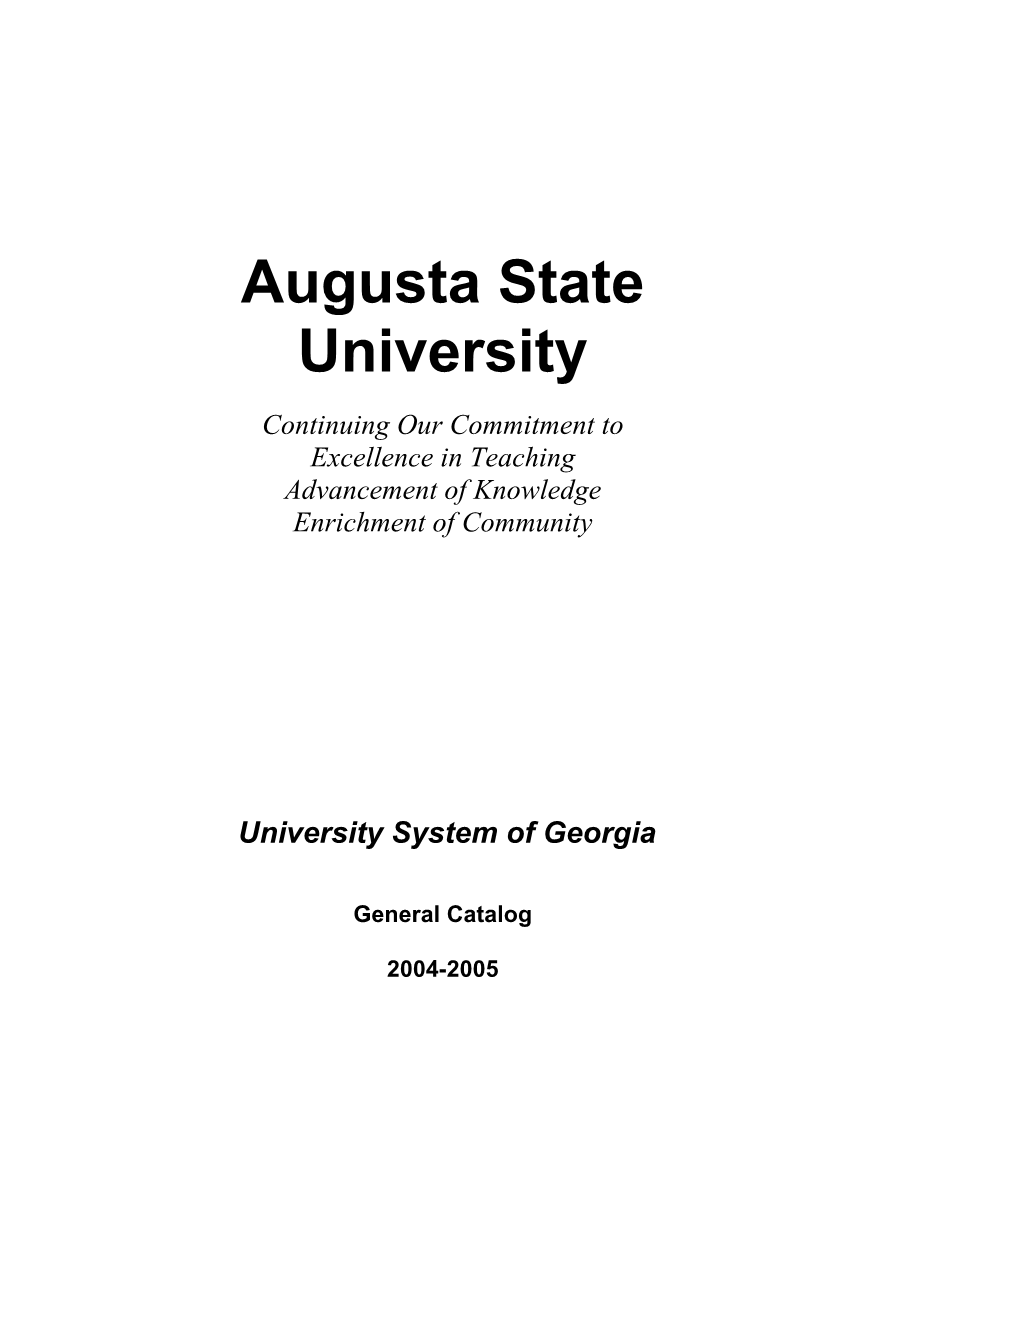 Augusta State University Augusta, Georgia 30904-2200